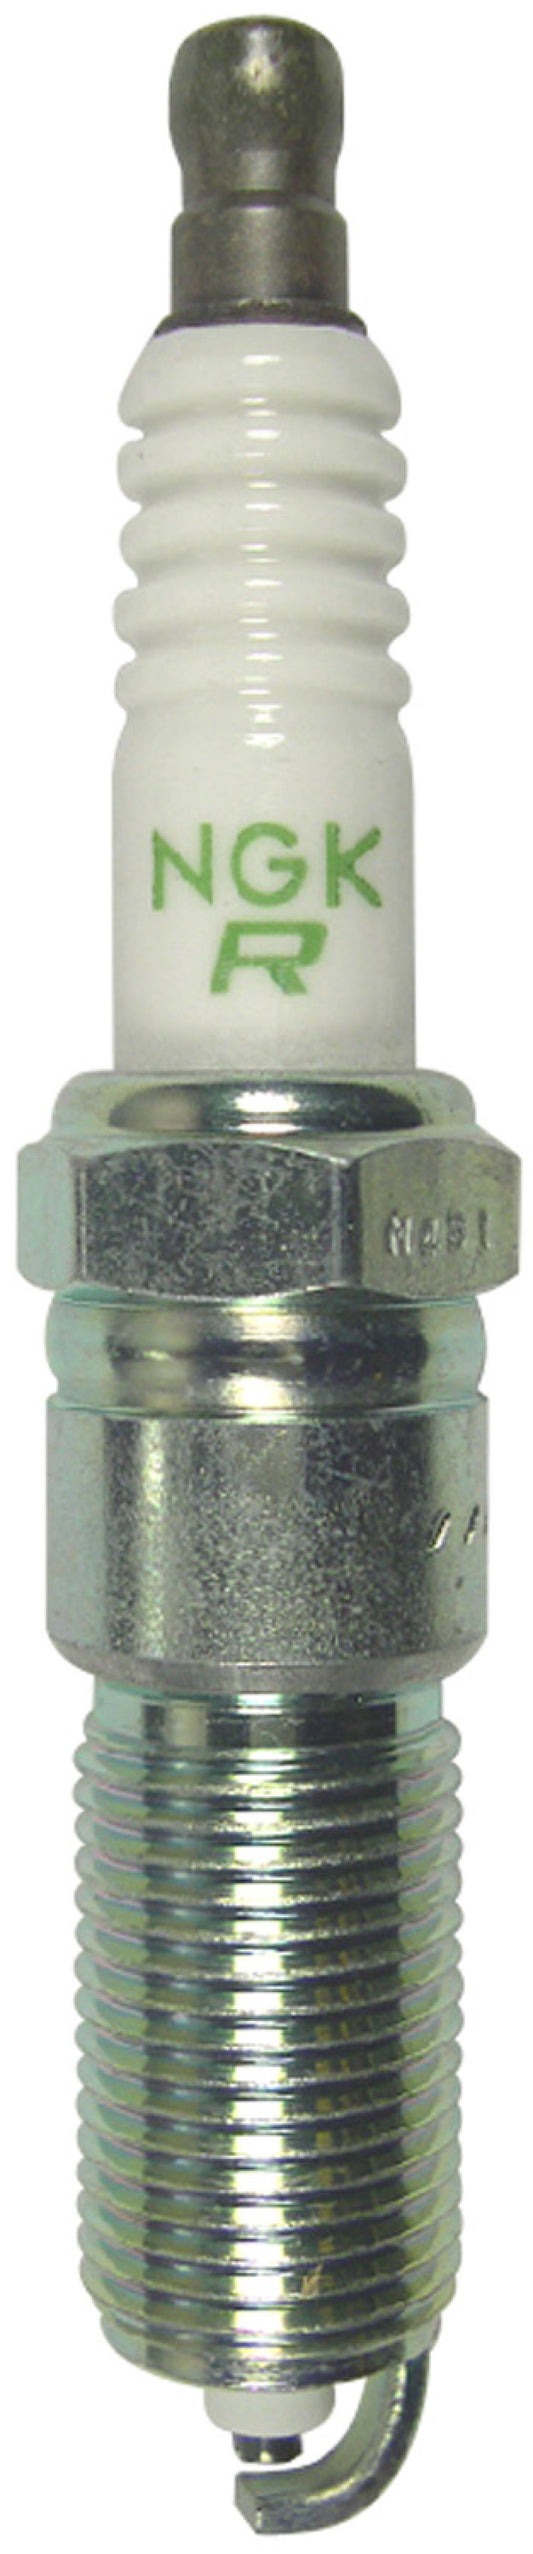 NGK Nickel Spark Plug Box of 4 (LZTR4A-11)